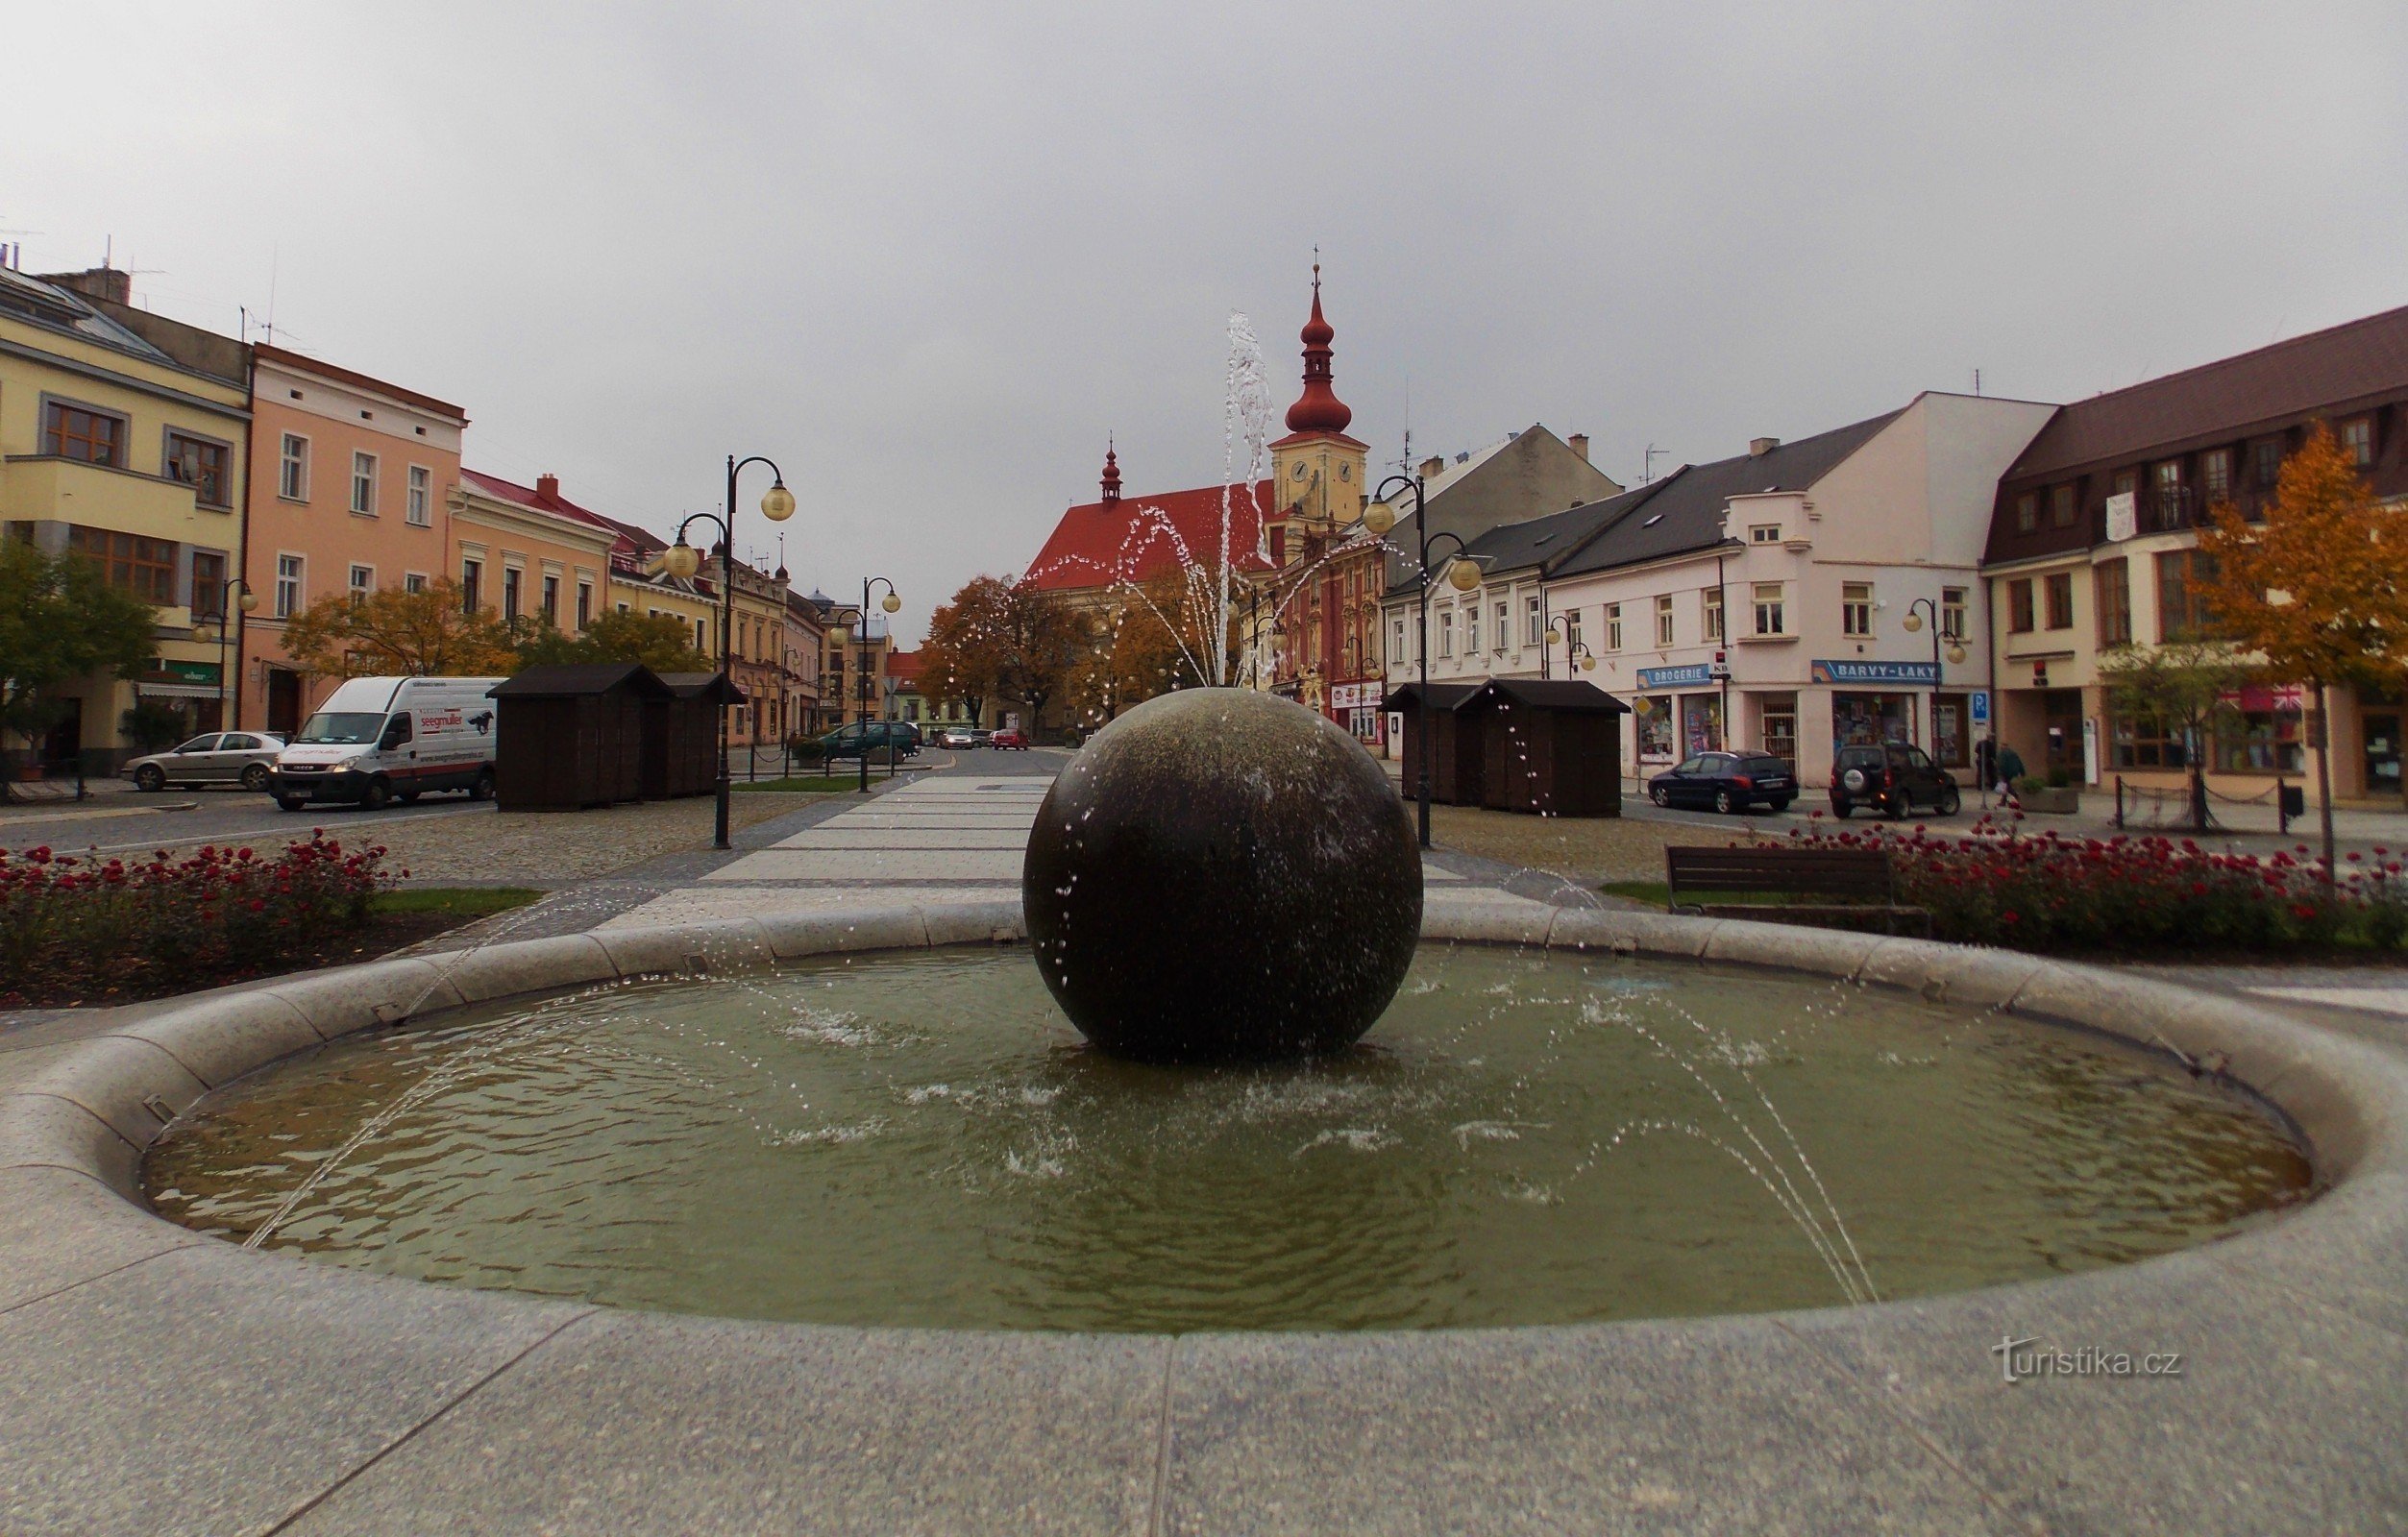 Holešovský náměstín hallitseva piirre on pyöreä suihkulähde